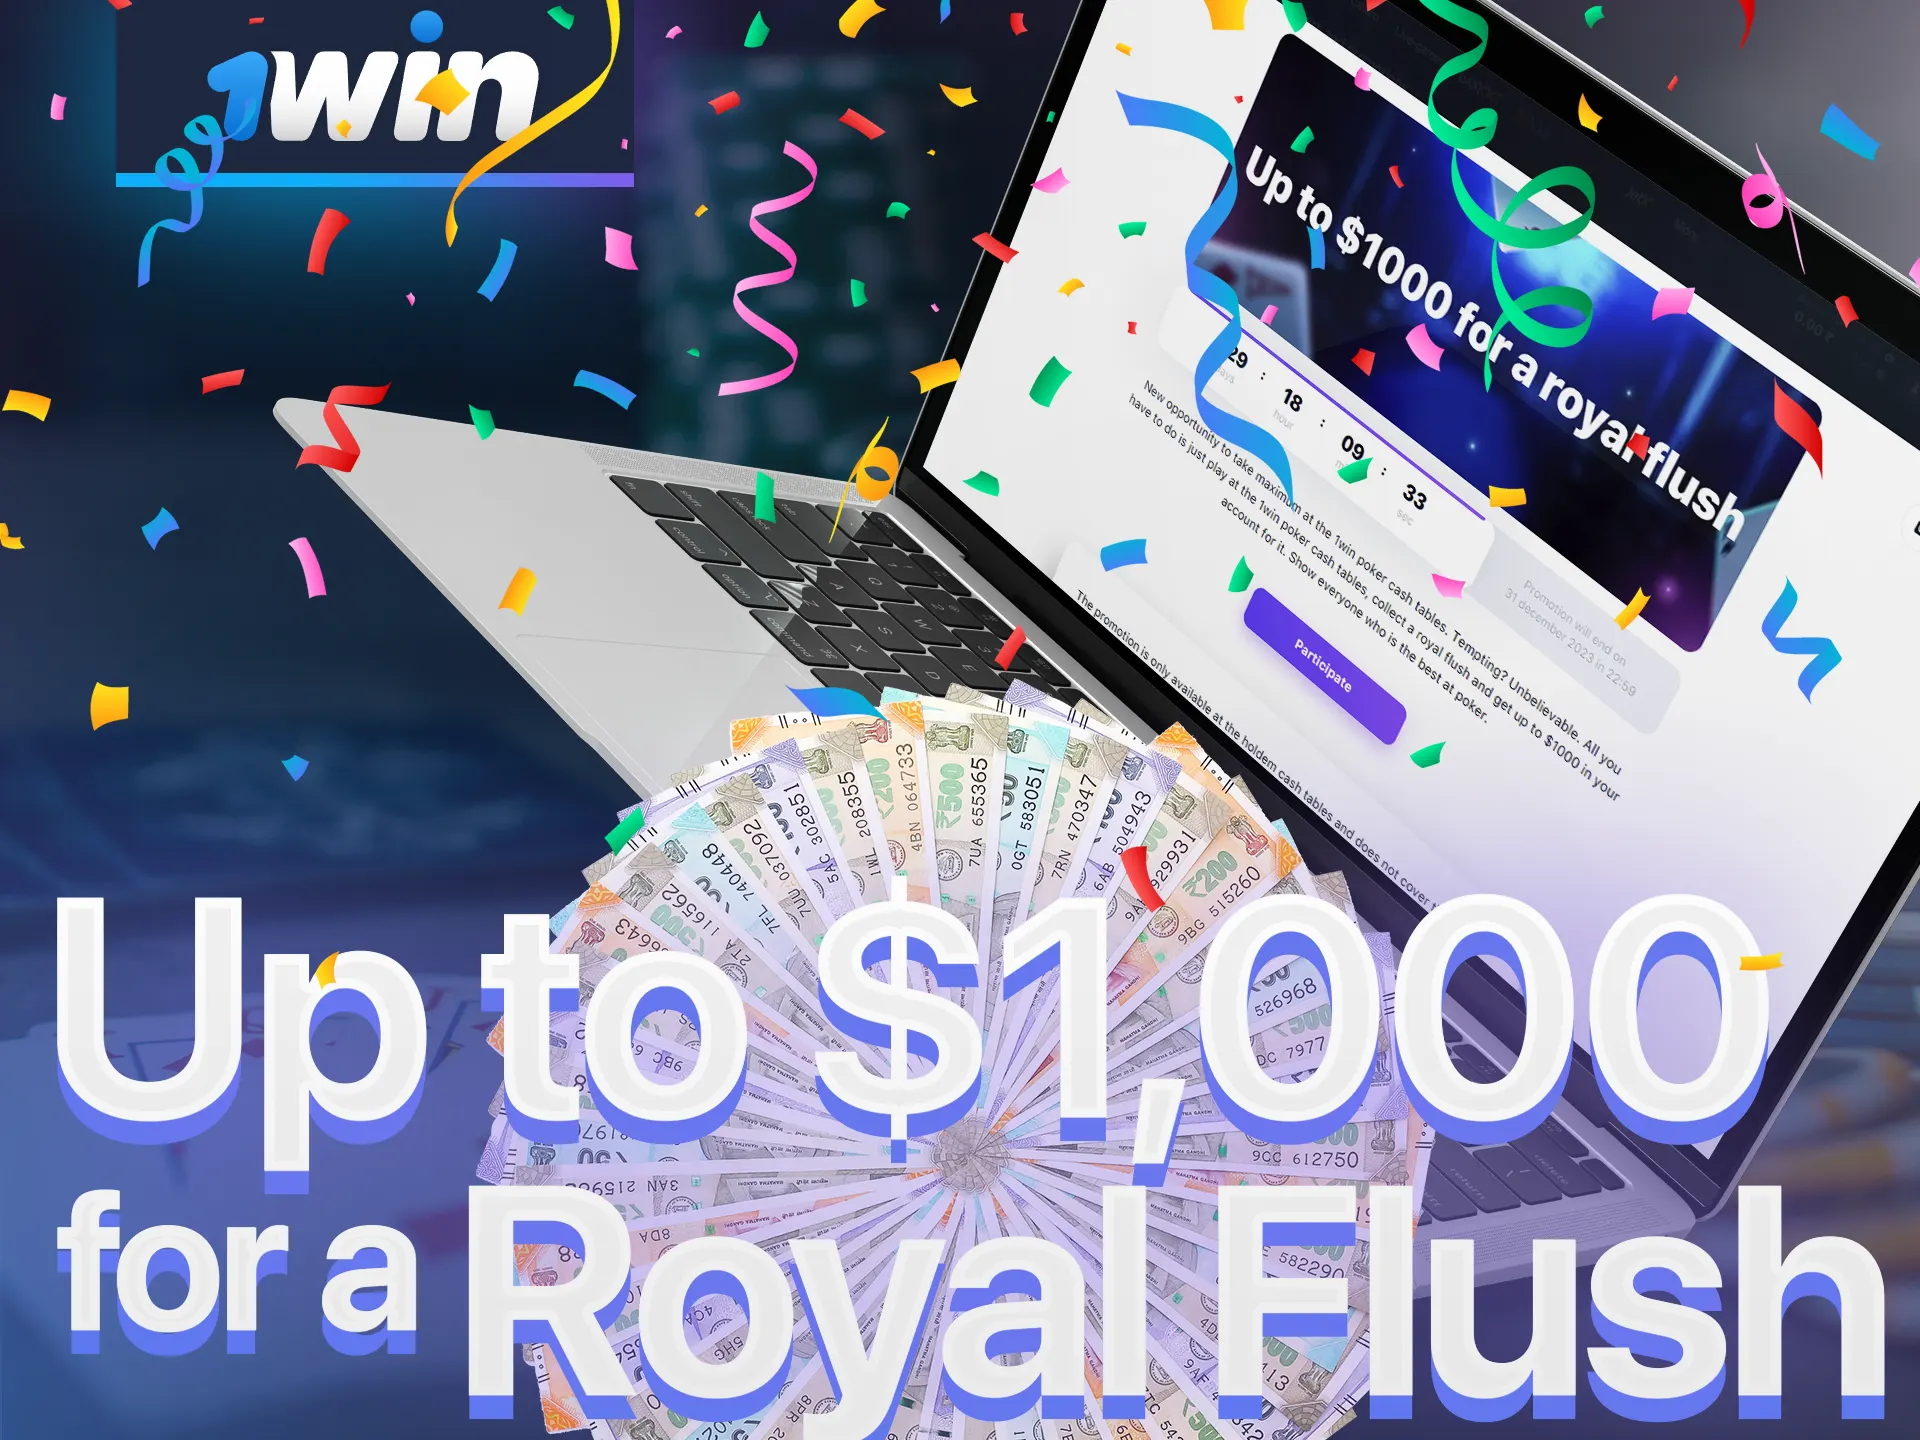 With 1Win you can get a nice royal flush bonus.